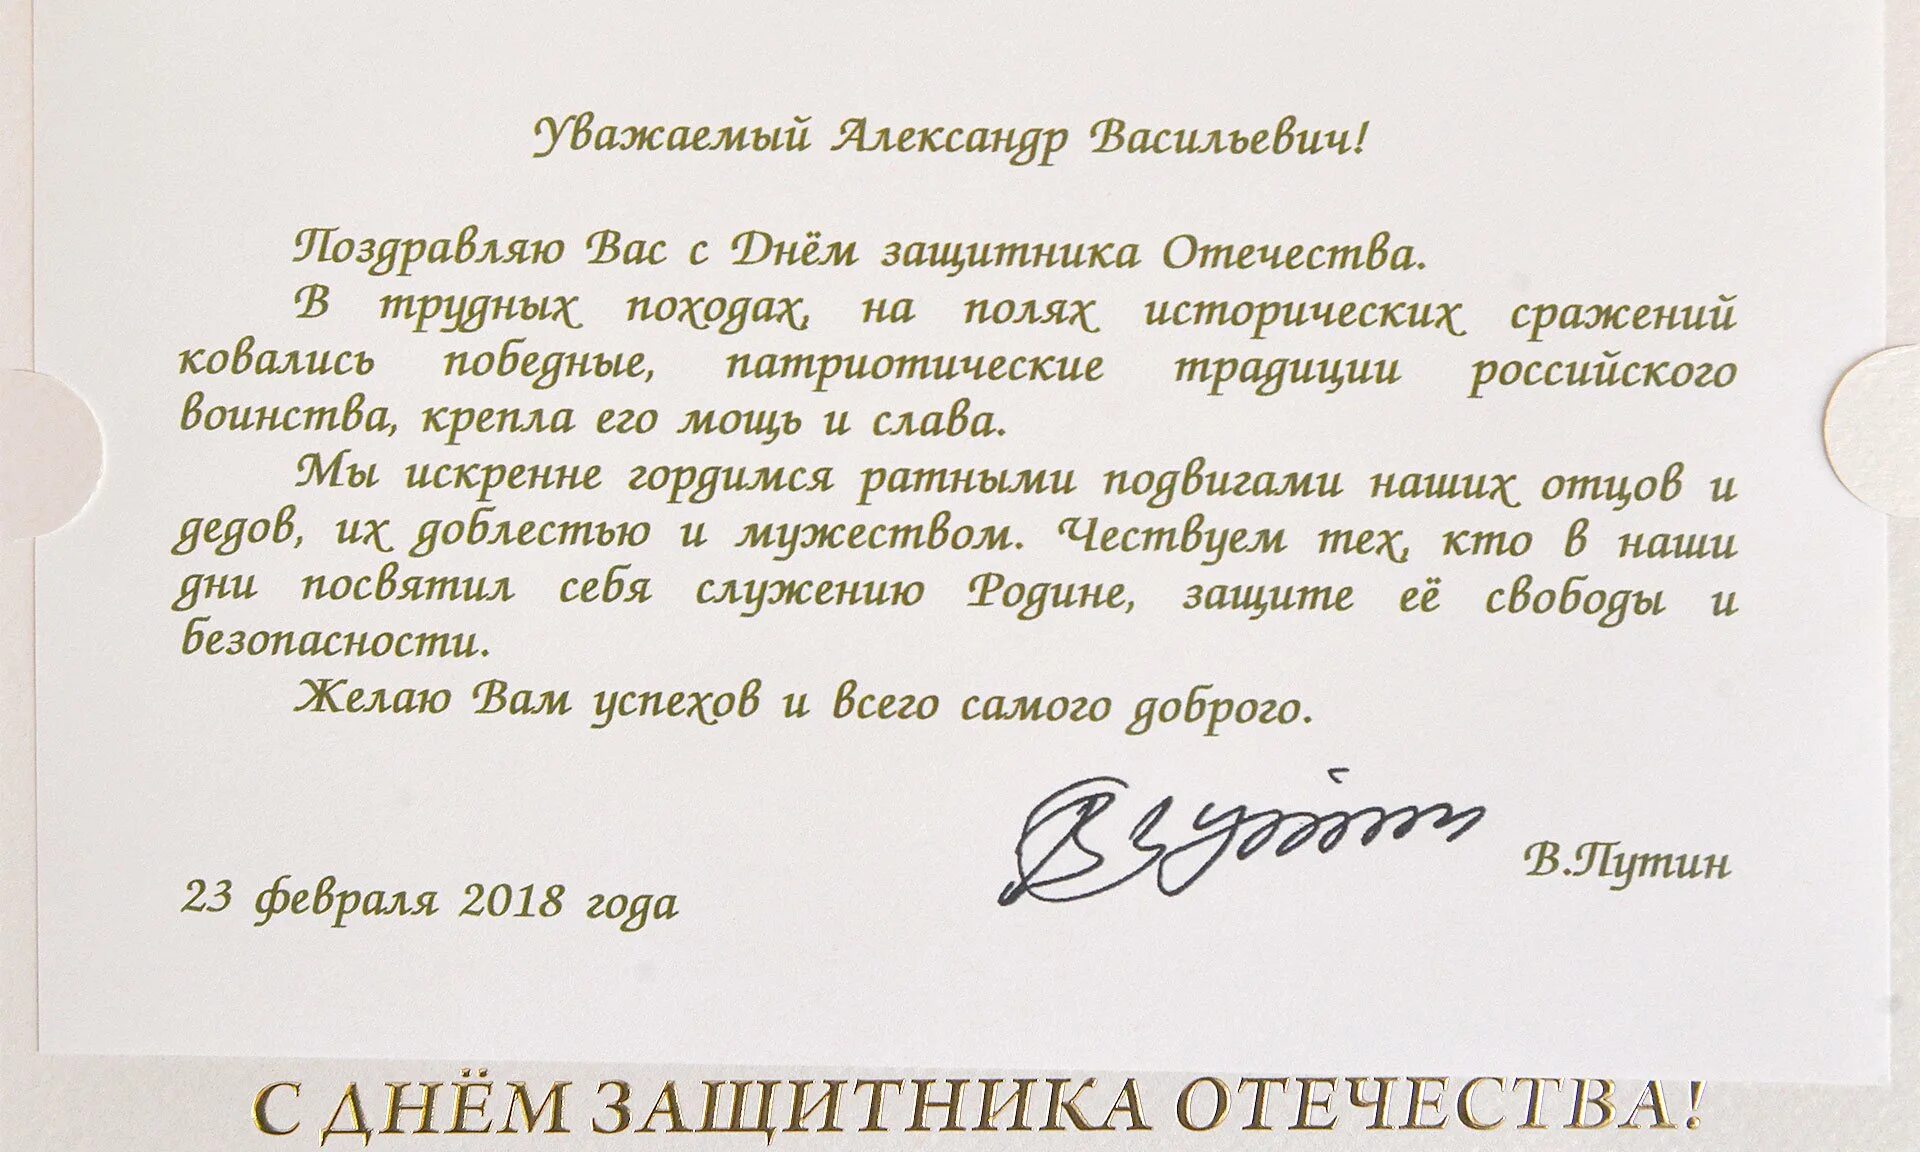 Поздравление Путина с днем защитника Отечества. Поздравление губернатора с днем рождения. Поздравление губернатора с 23 февраля. Губернатор поздравил с 23 февраля. С днем защитника отечества губернатор